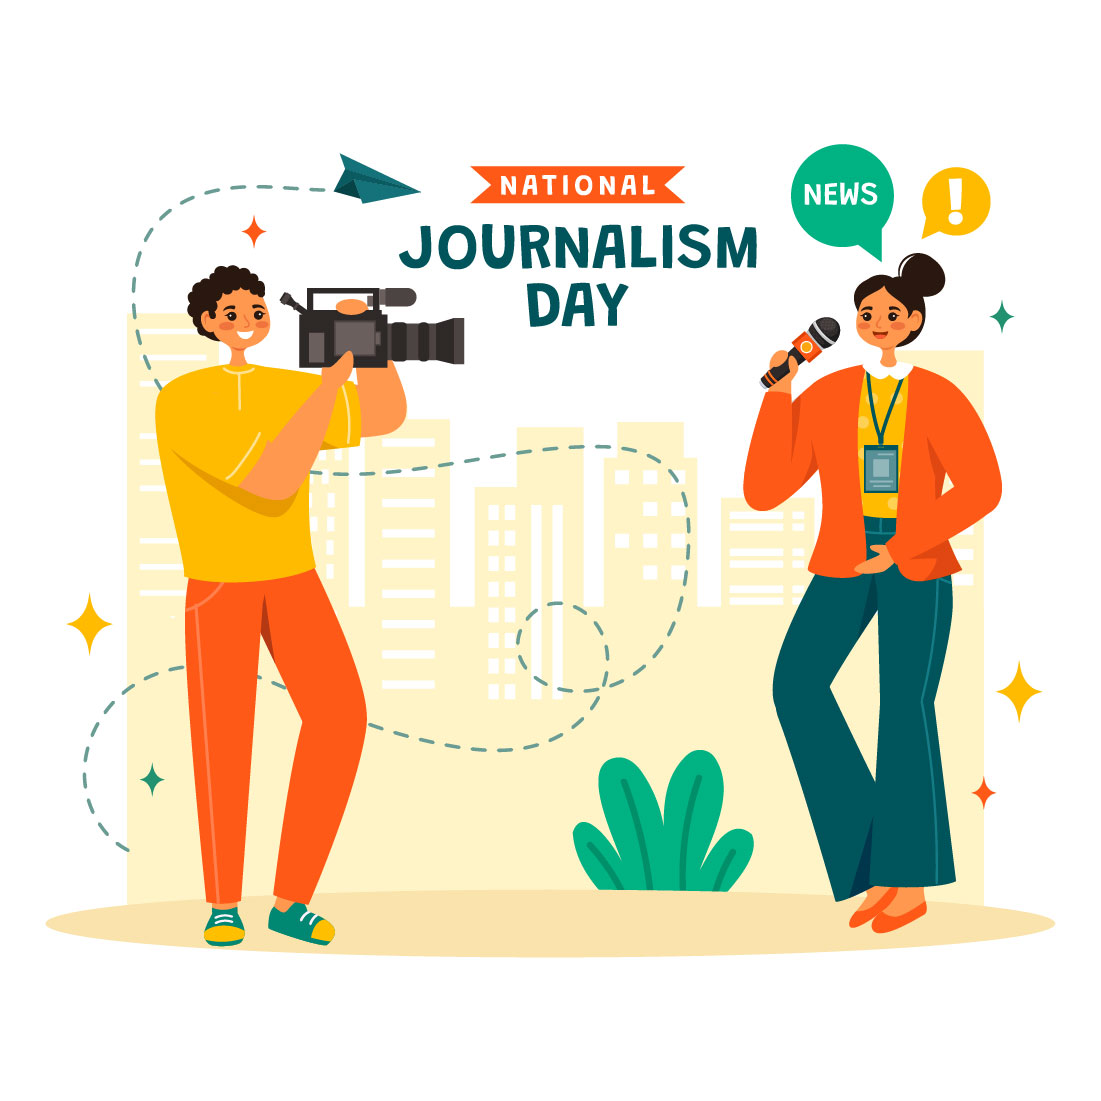 13 National Journalism Day Illustration cover image.